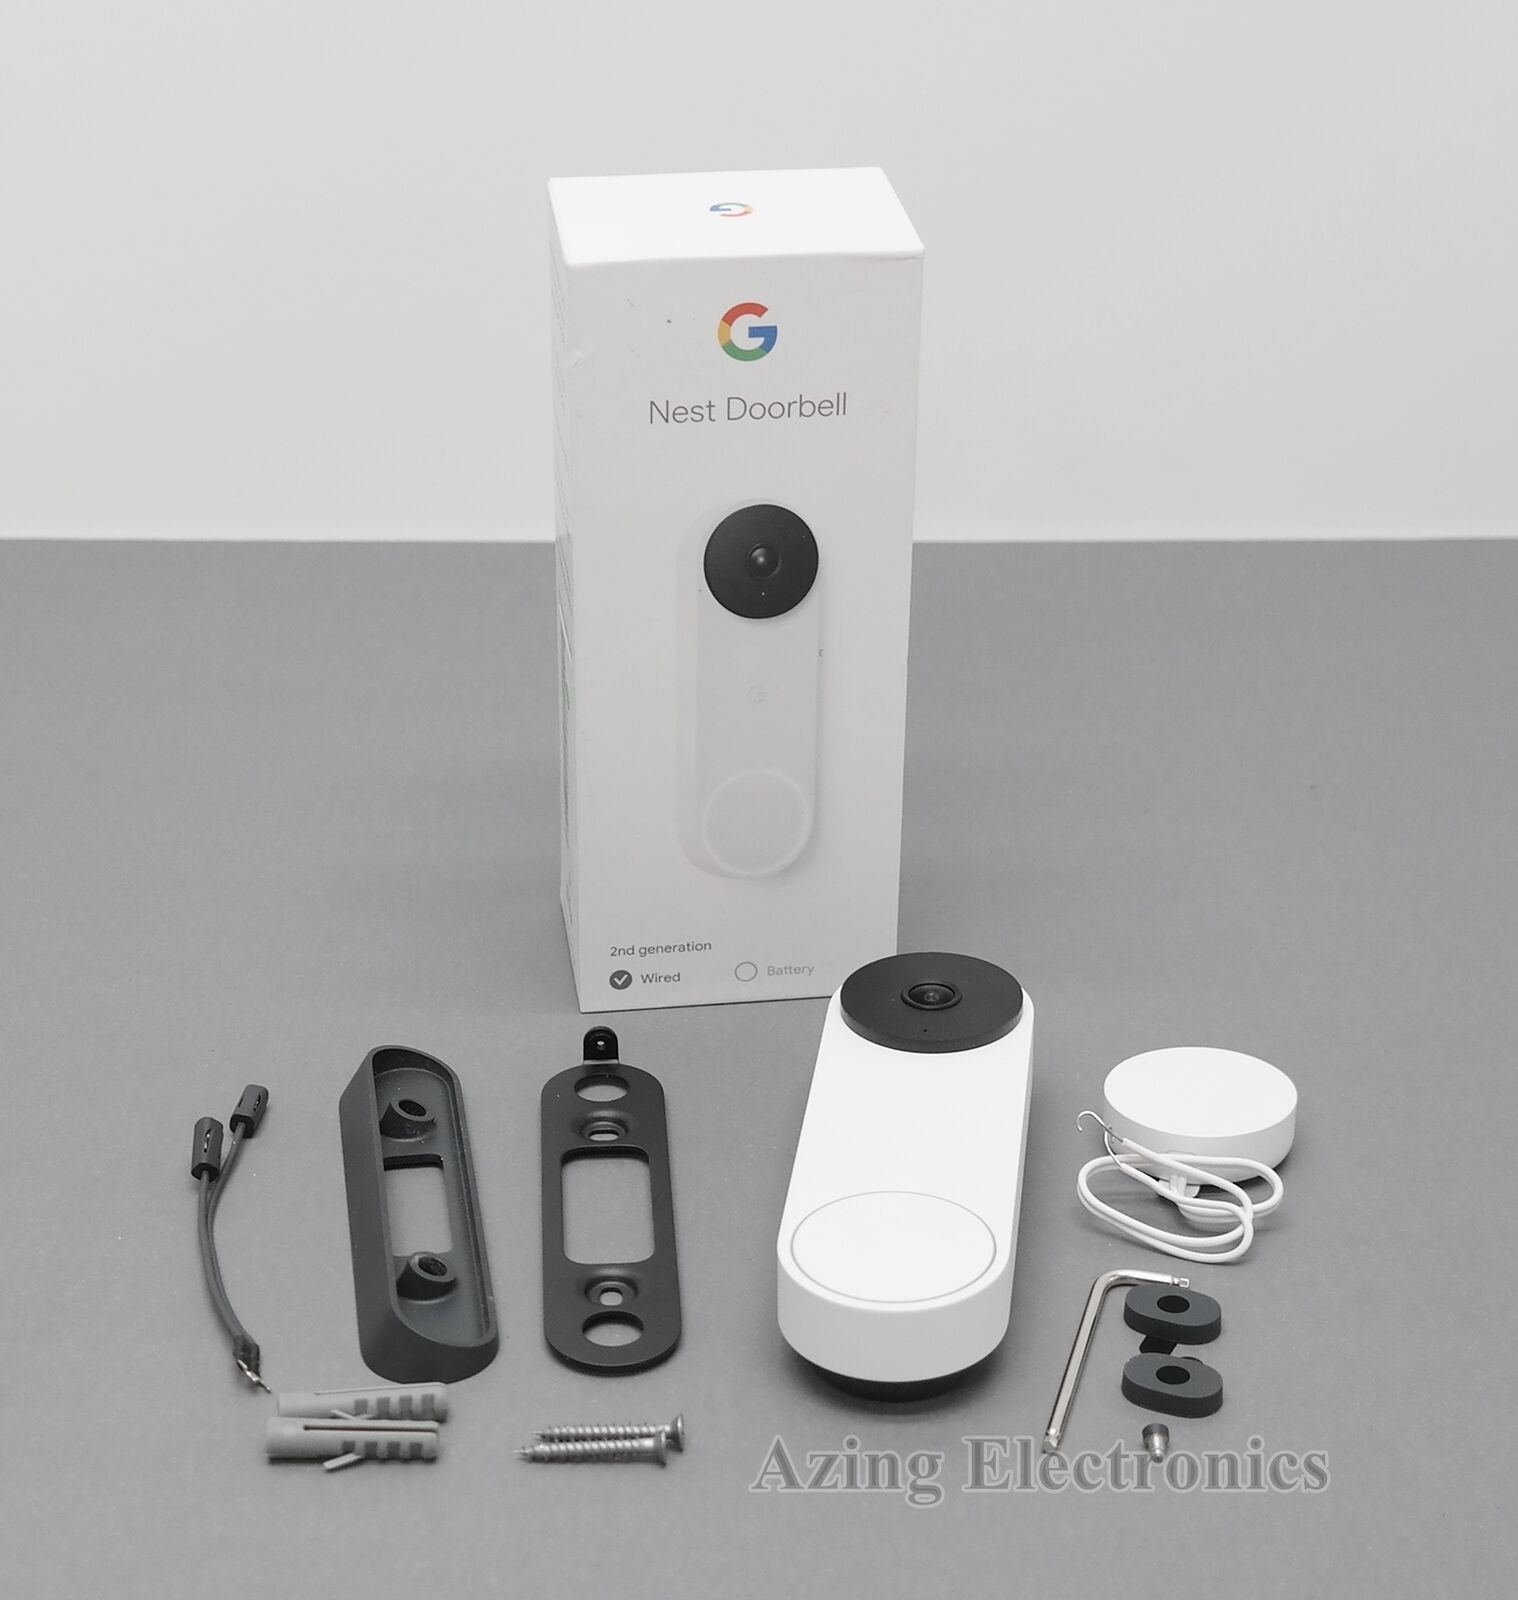 Google Nest GA02767-US Doorbell Wired (2nd Generation) - Snow